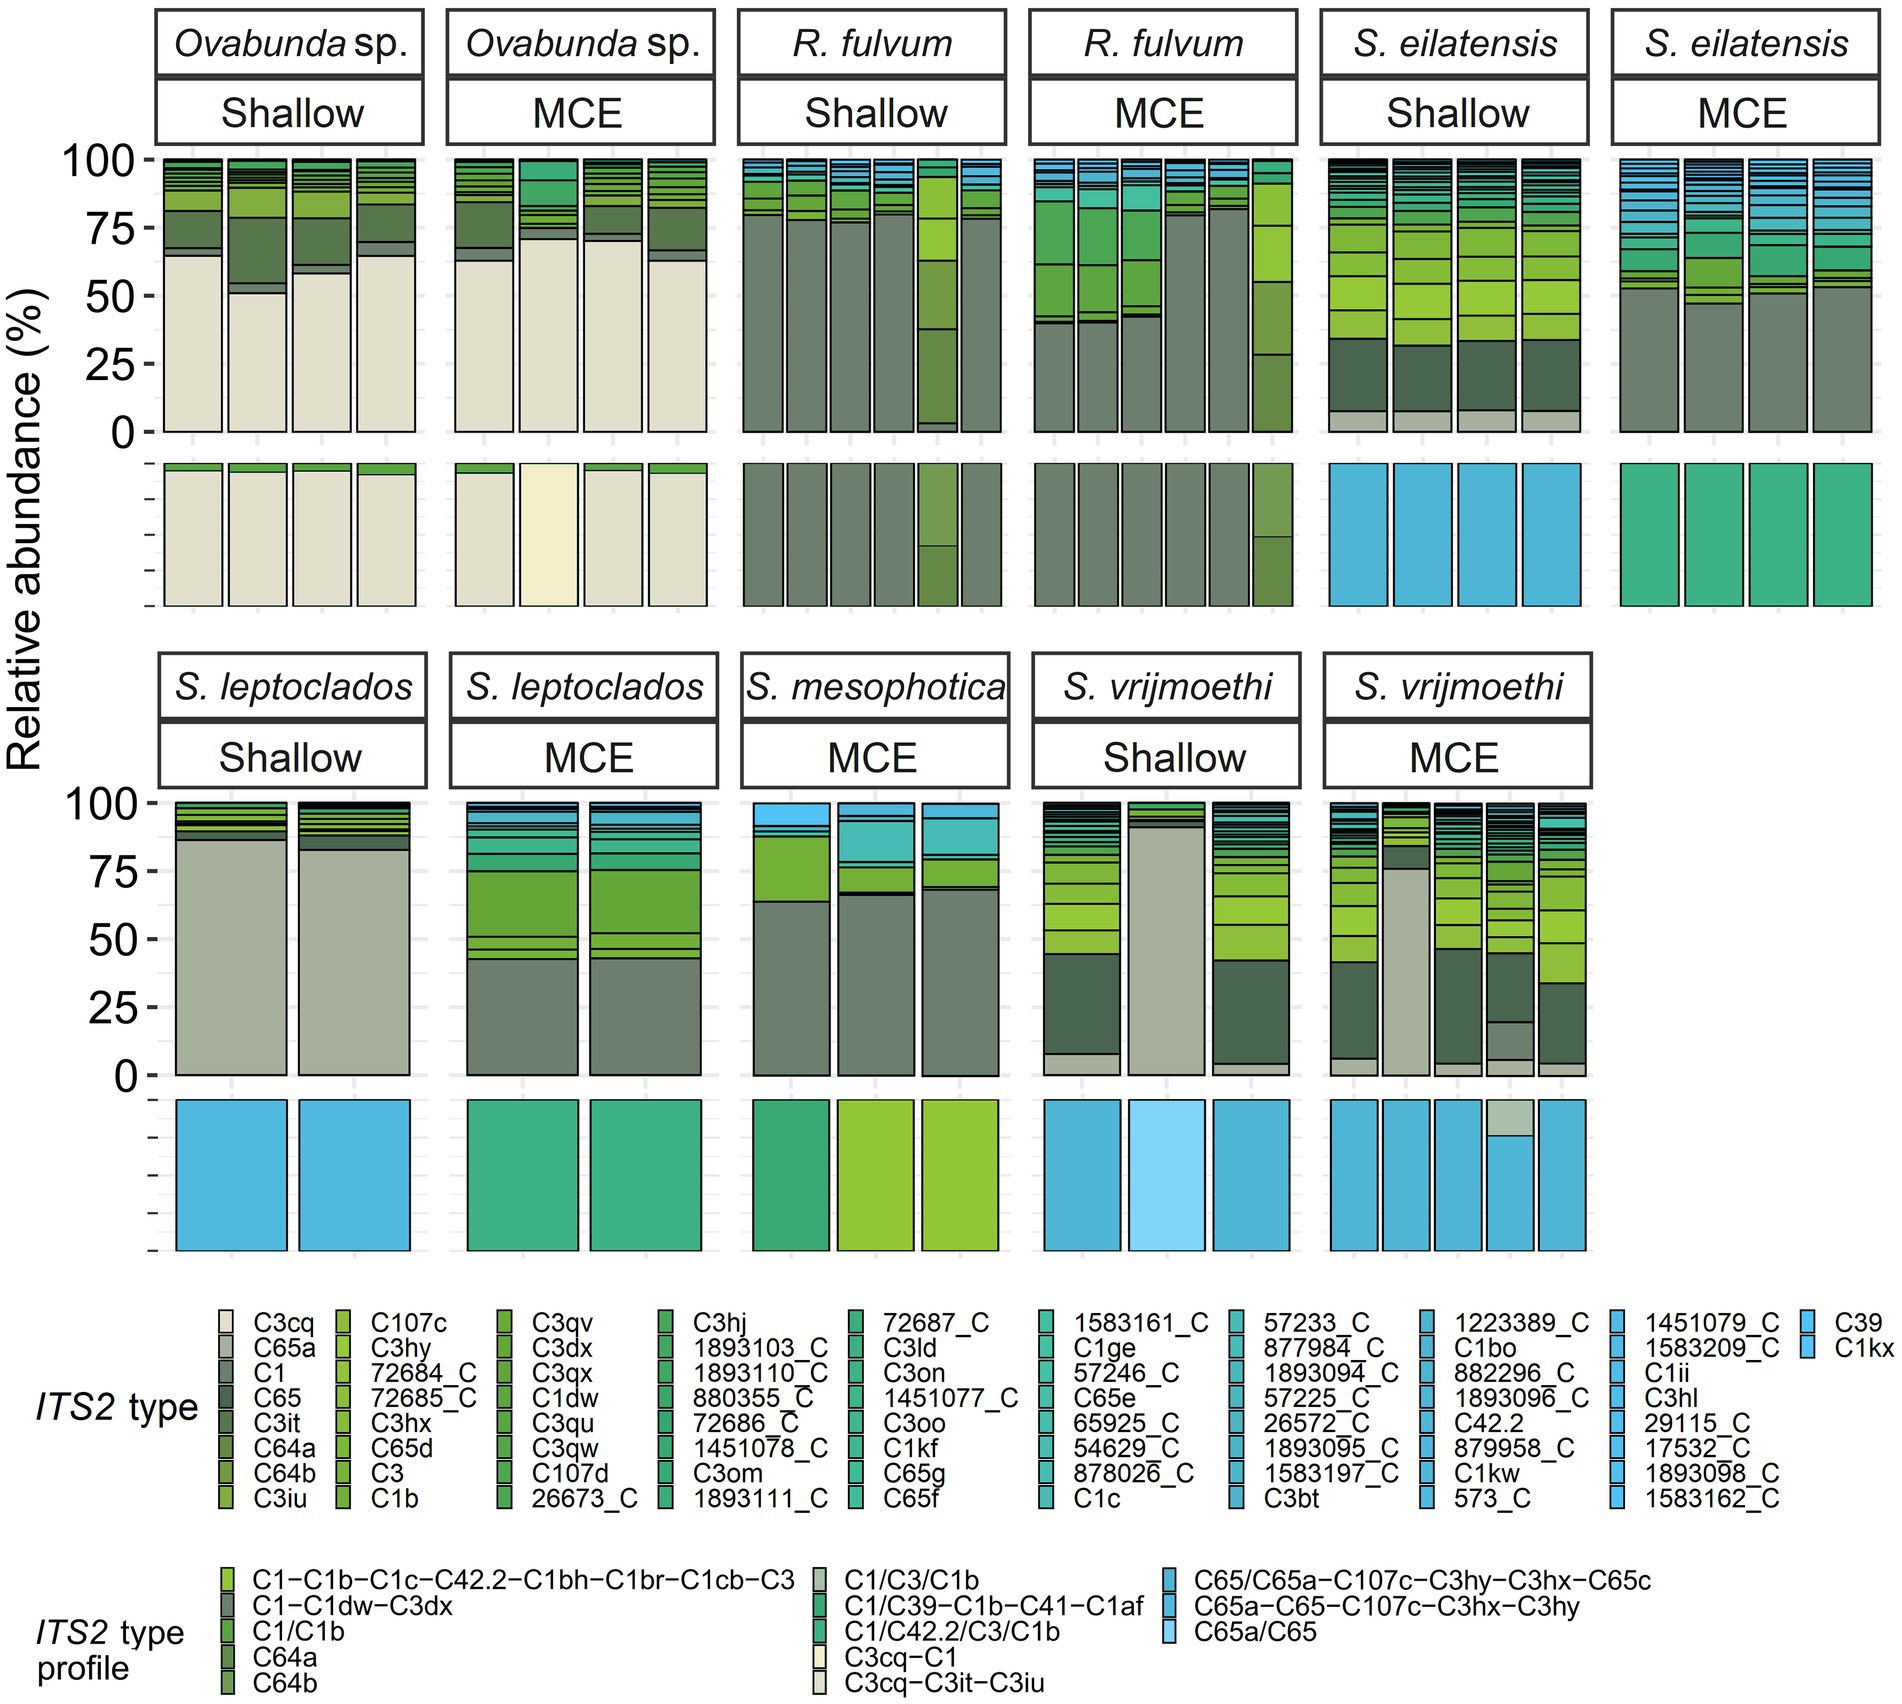 Building consensus around the assessment and interpretation of  Symbiodiniaceae diversity [PeerJ]